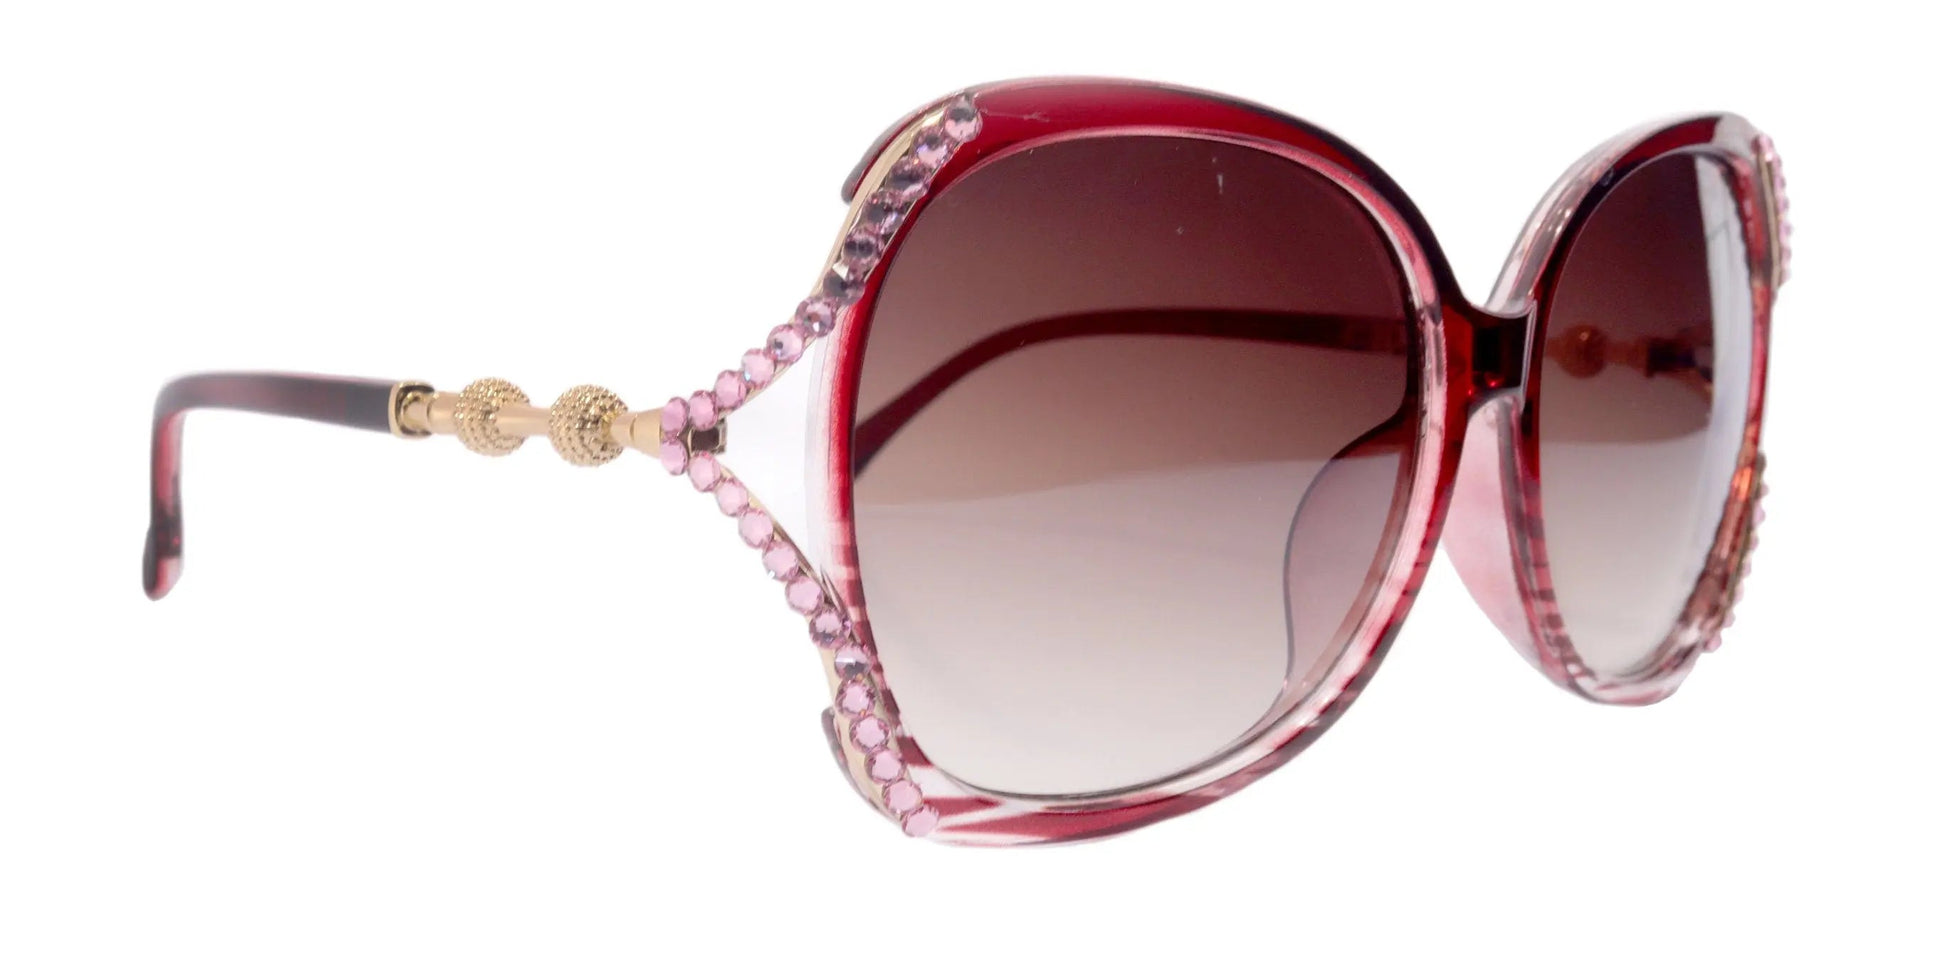 Bling Women Sunglasses  Genuine European Crystals,  100% UV Protection. NY Fifth Avenue 